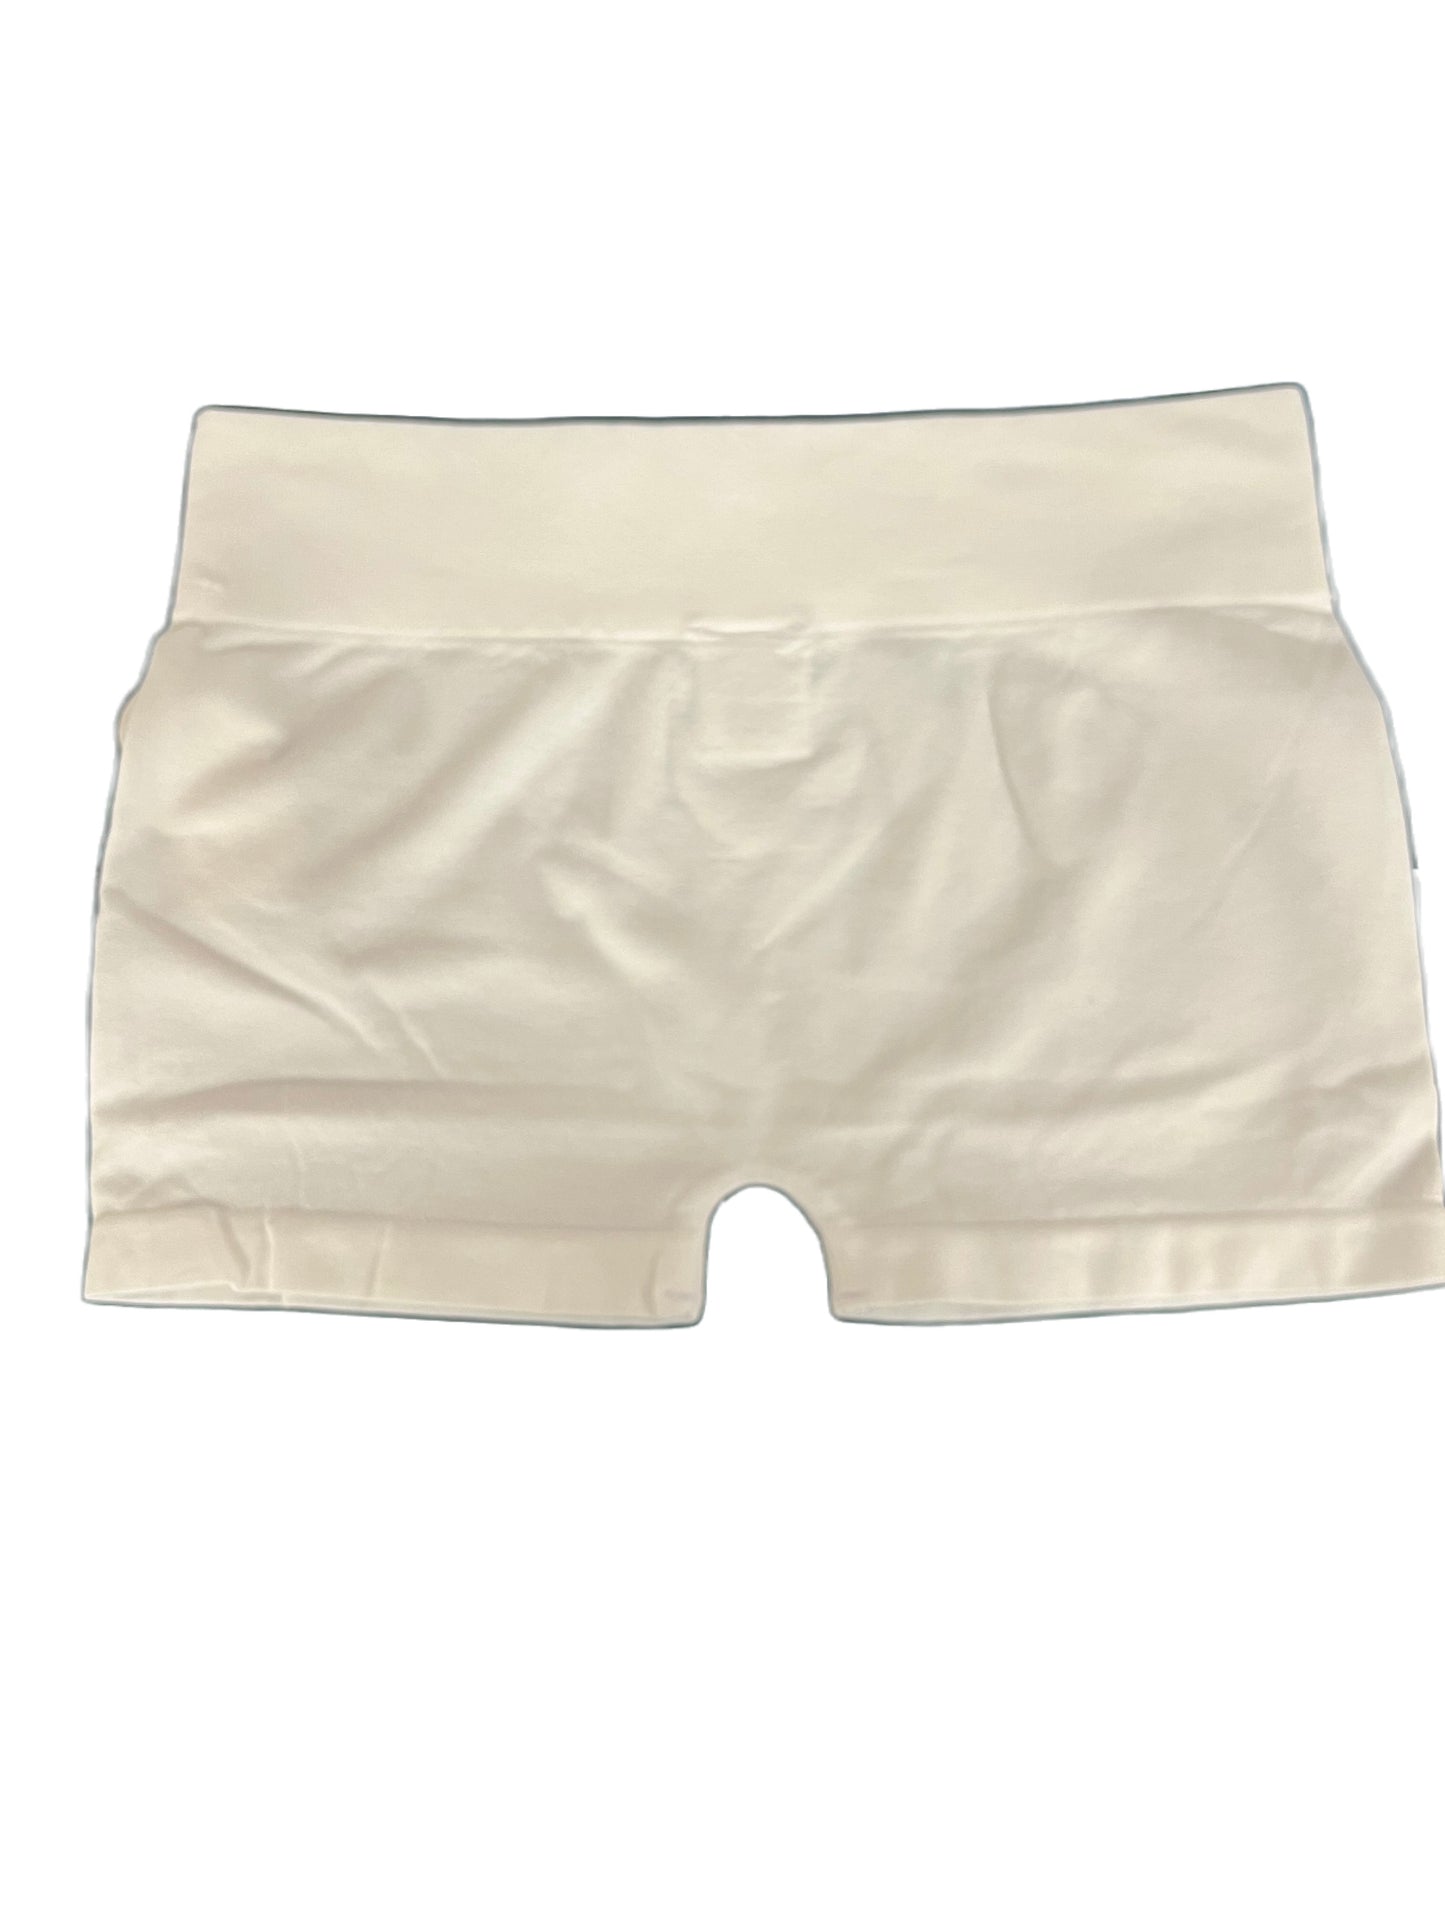 Boy Short Undergarment